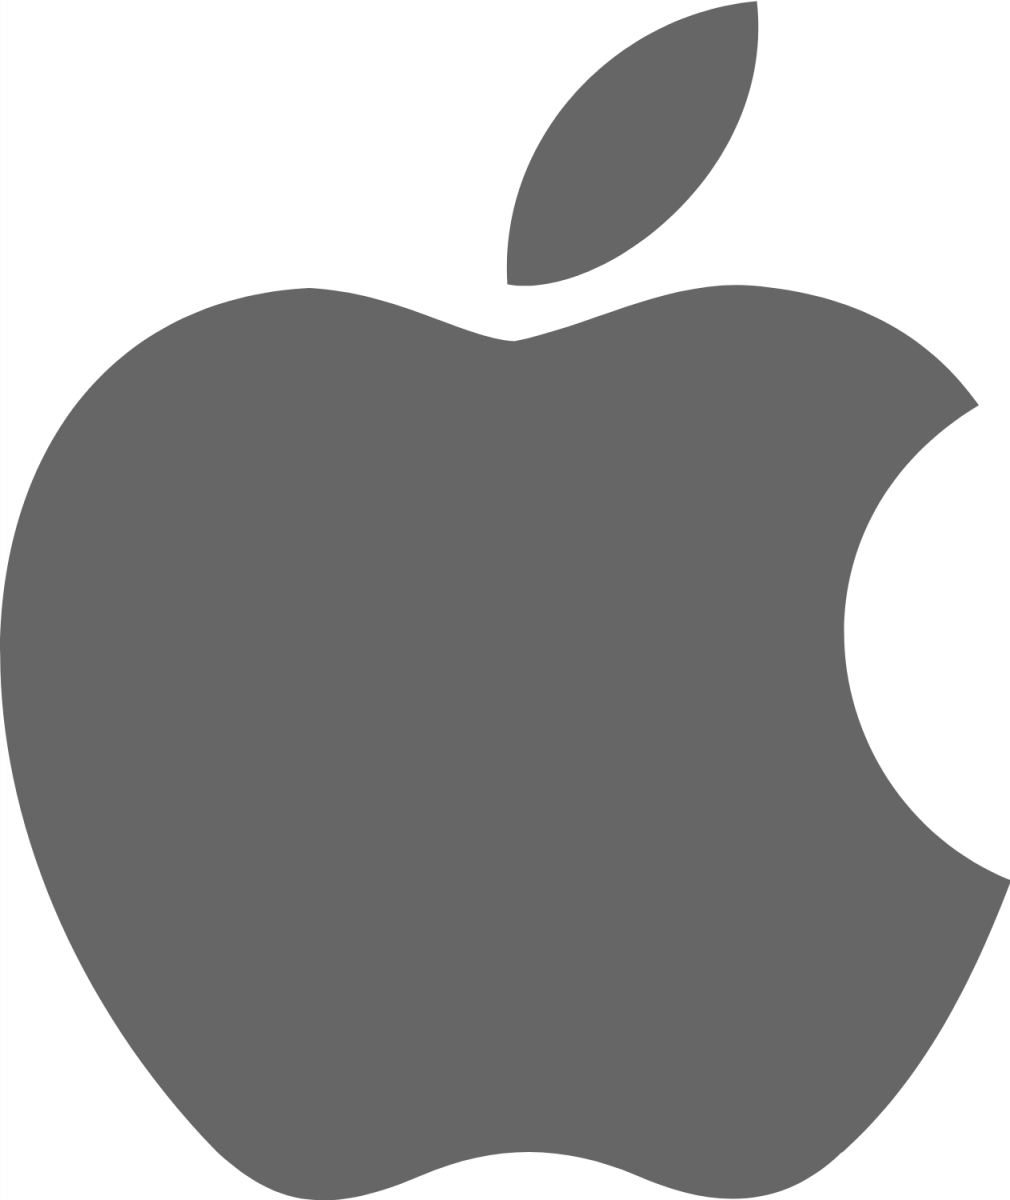 Apple it companies in New York